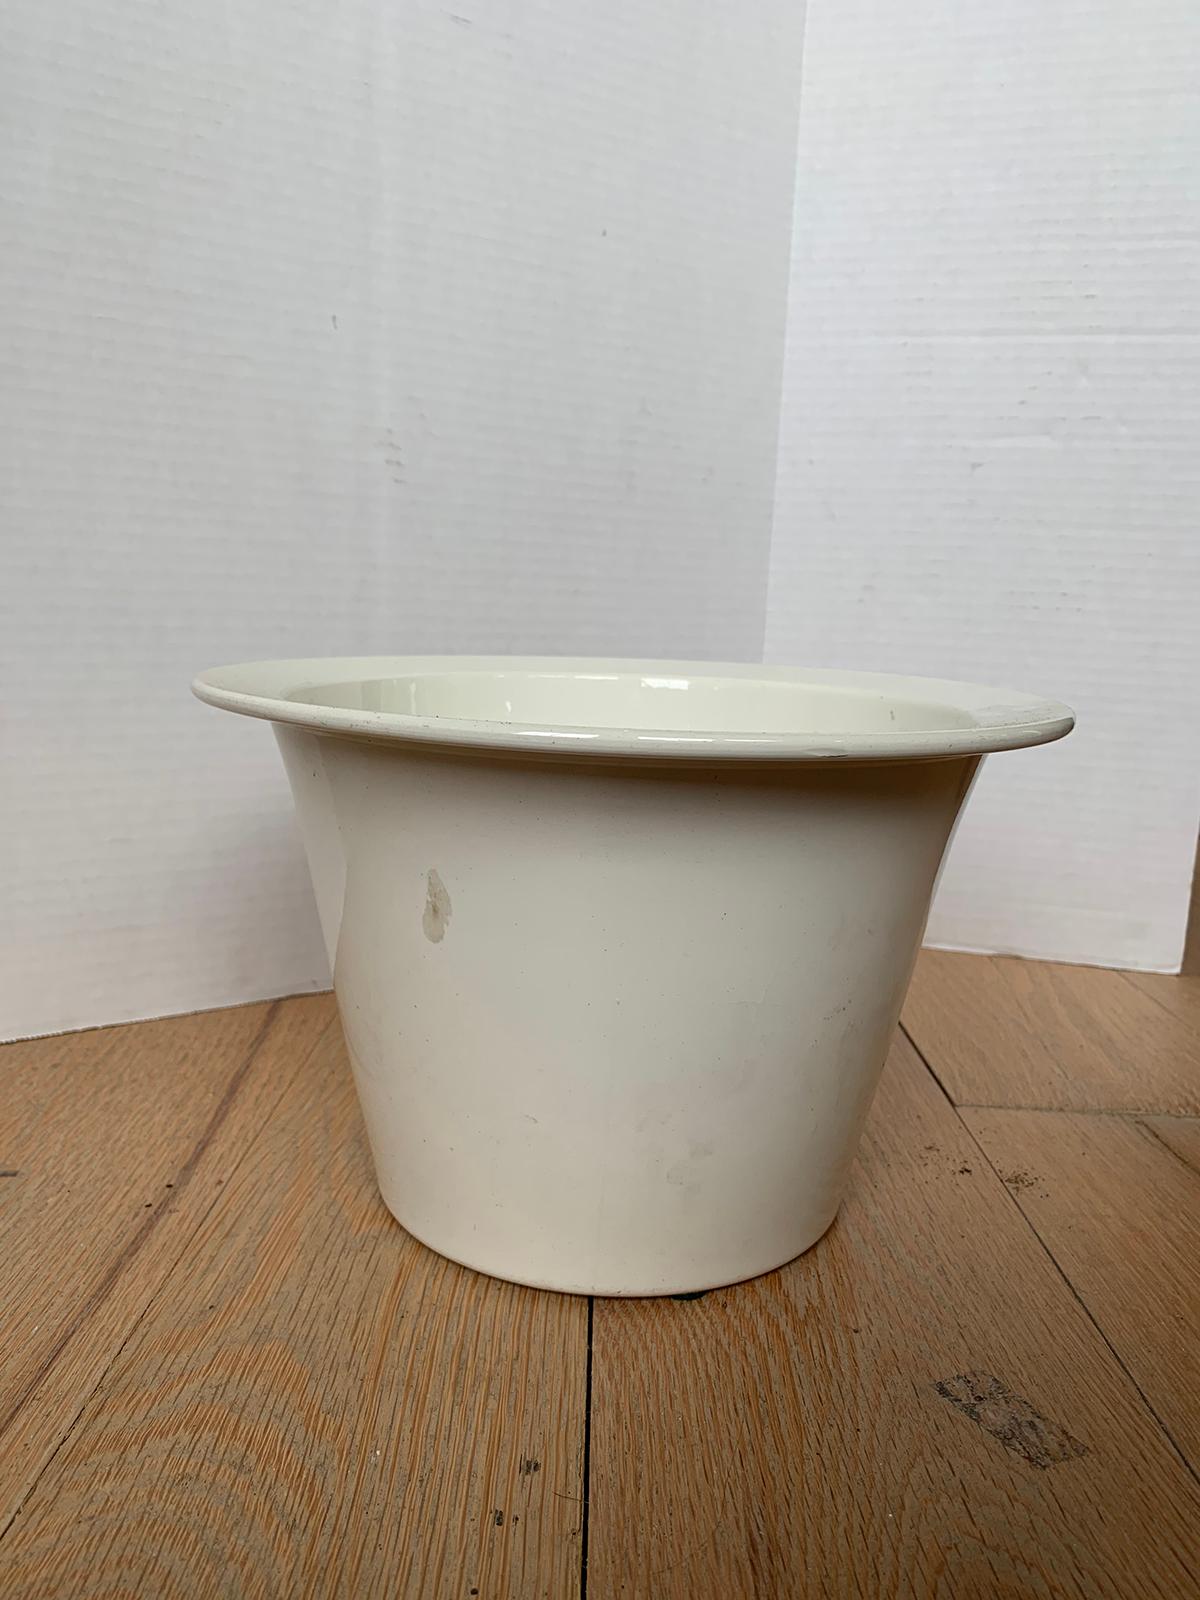 Late 18th-19th century circa 1800 creamware pot by Wedgwood, impressed mark.